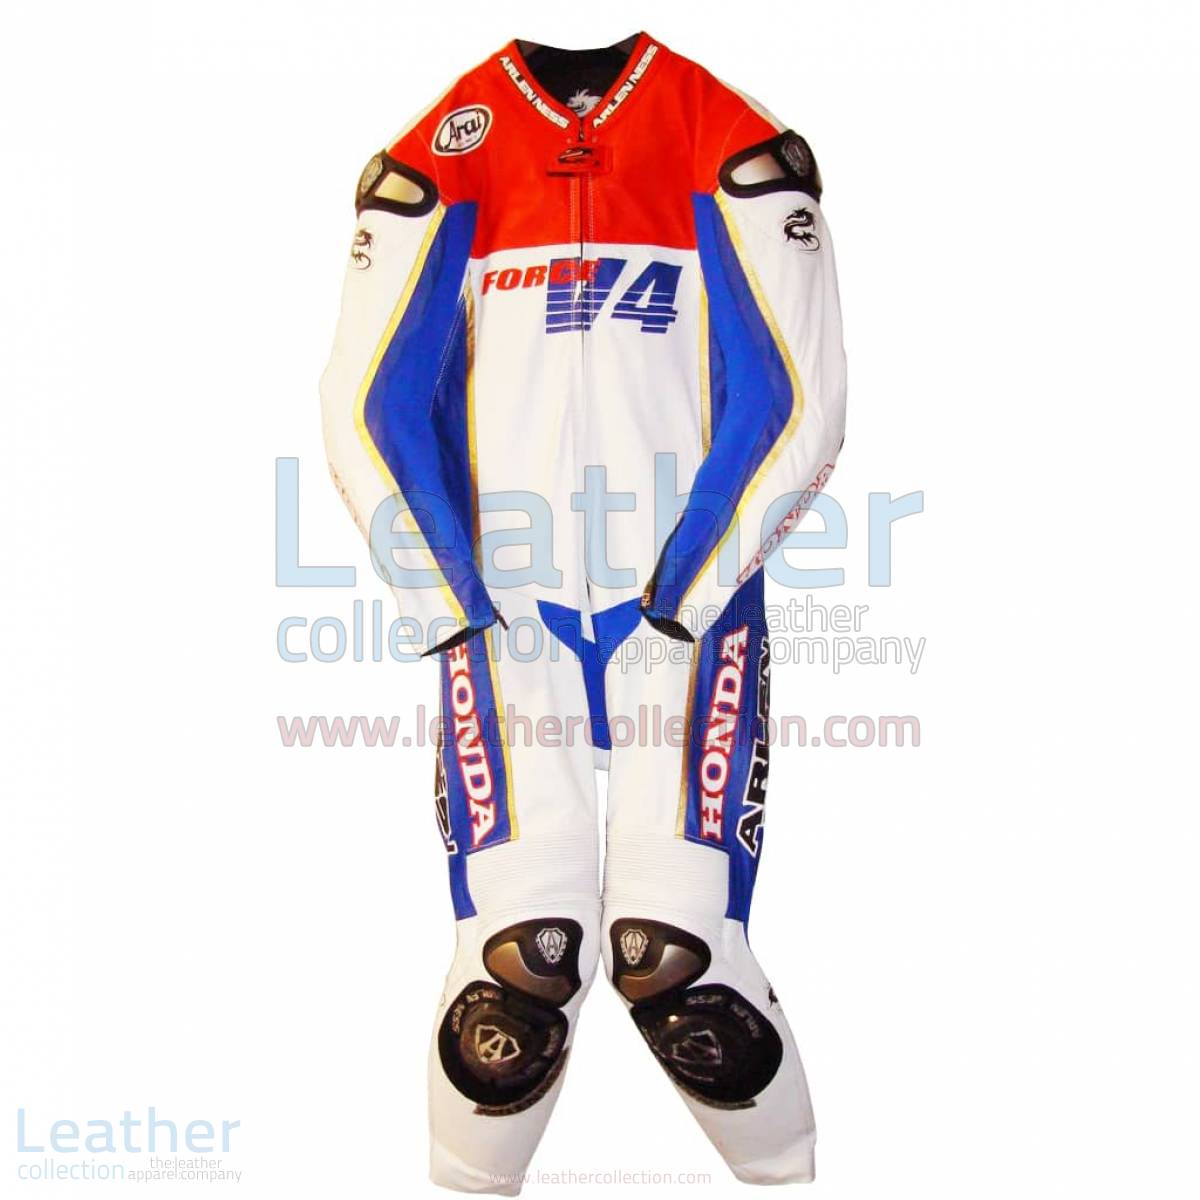 Roger Burnett Honda Goodwood Racing Suit